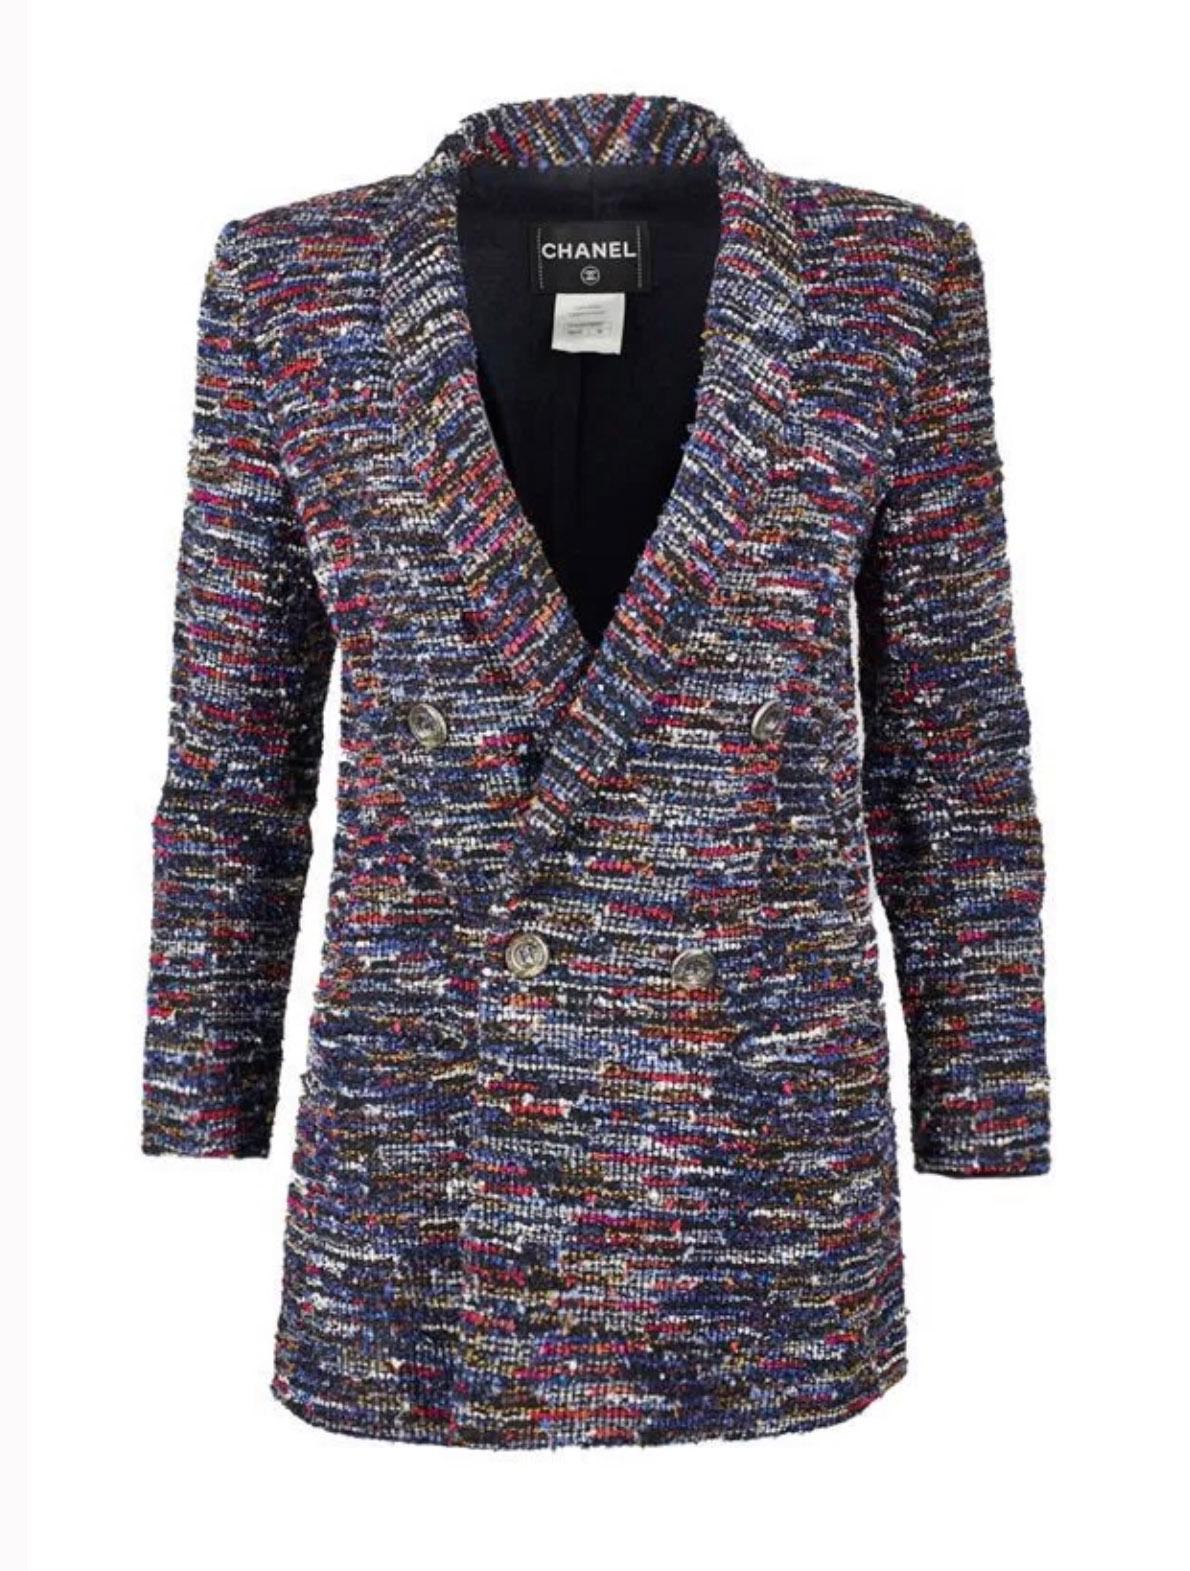 Chanel Cara Delevingne Style Runway Tweed jacket  For Sale 2